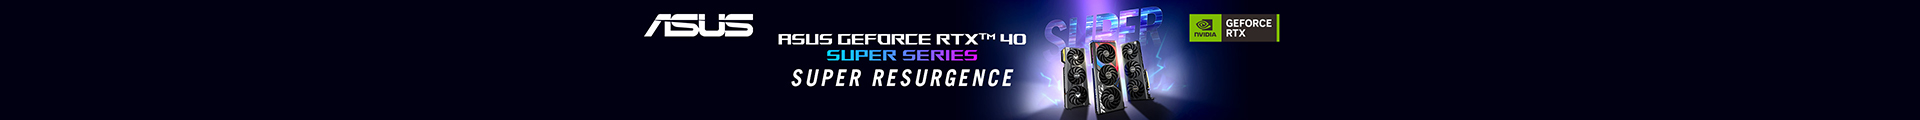 ASUS Geforce RTX™ 40 Super Series